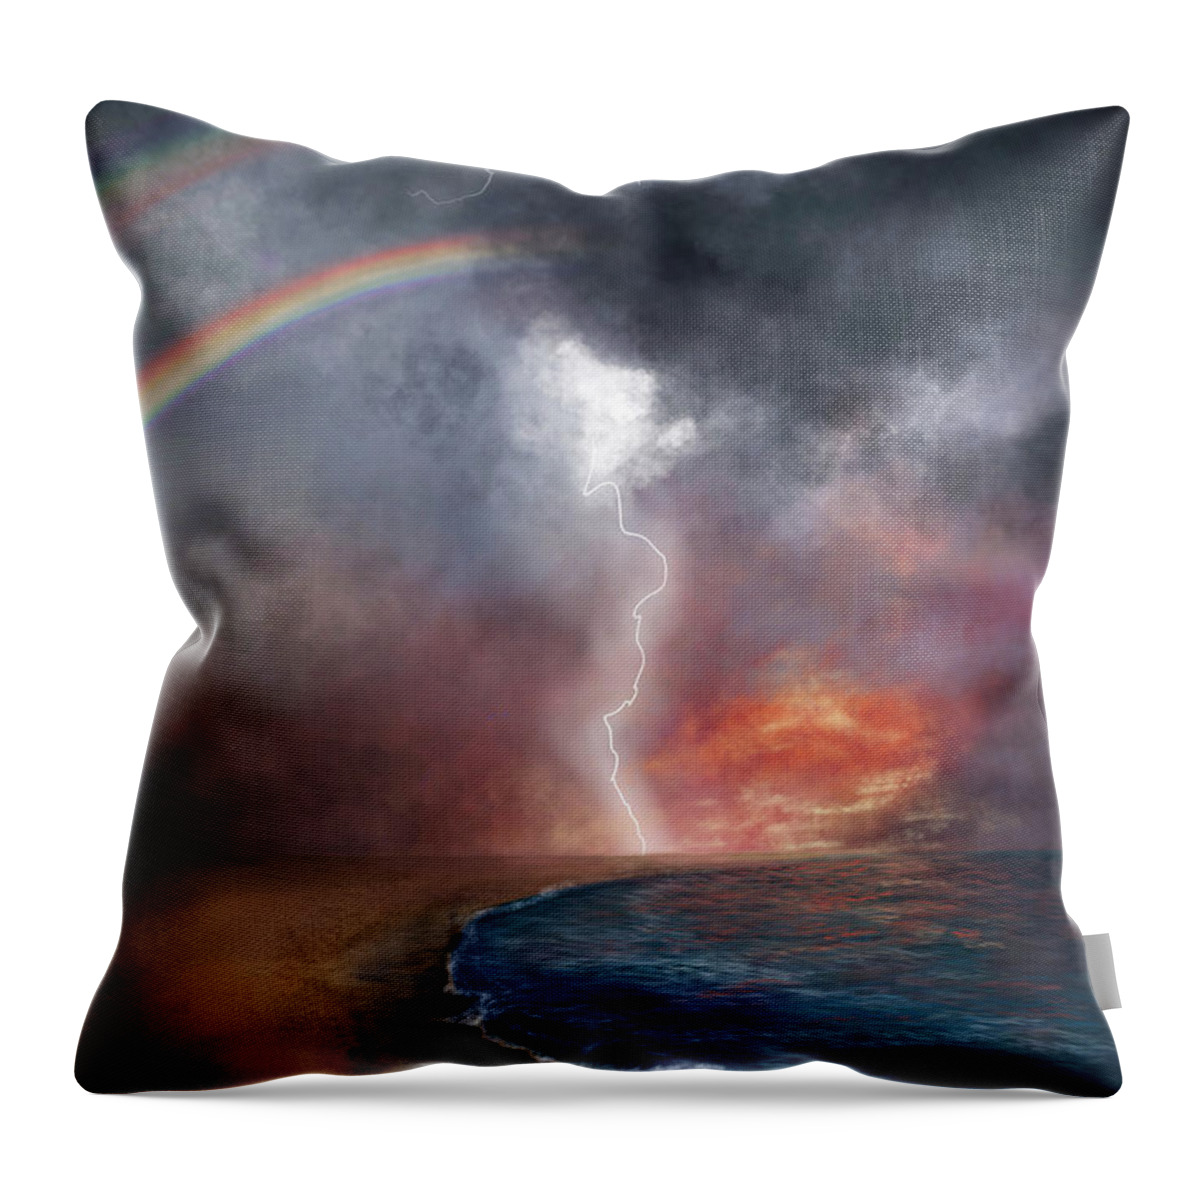 Rainbow Throw Pillow featuring the digital art The Chaos and the Calm by Rachel Emmett